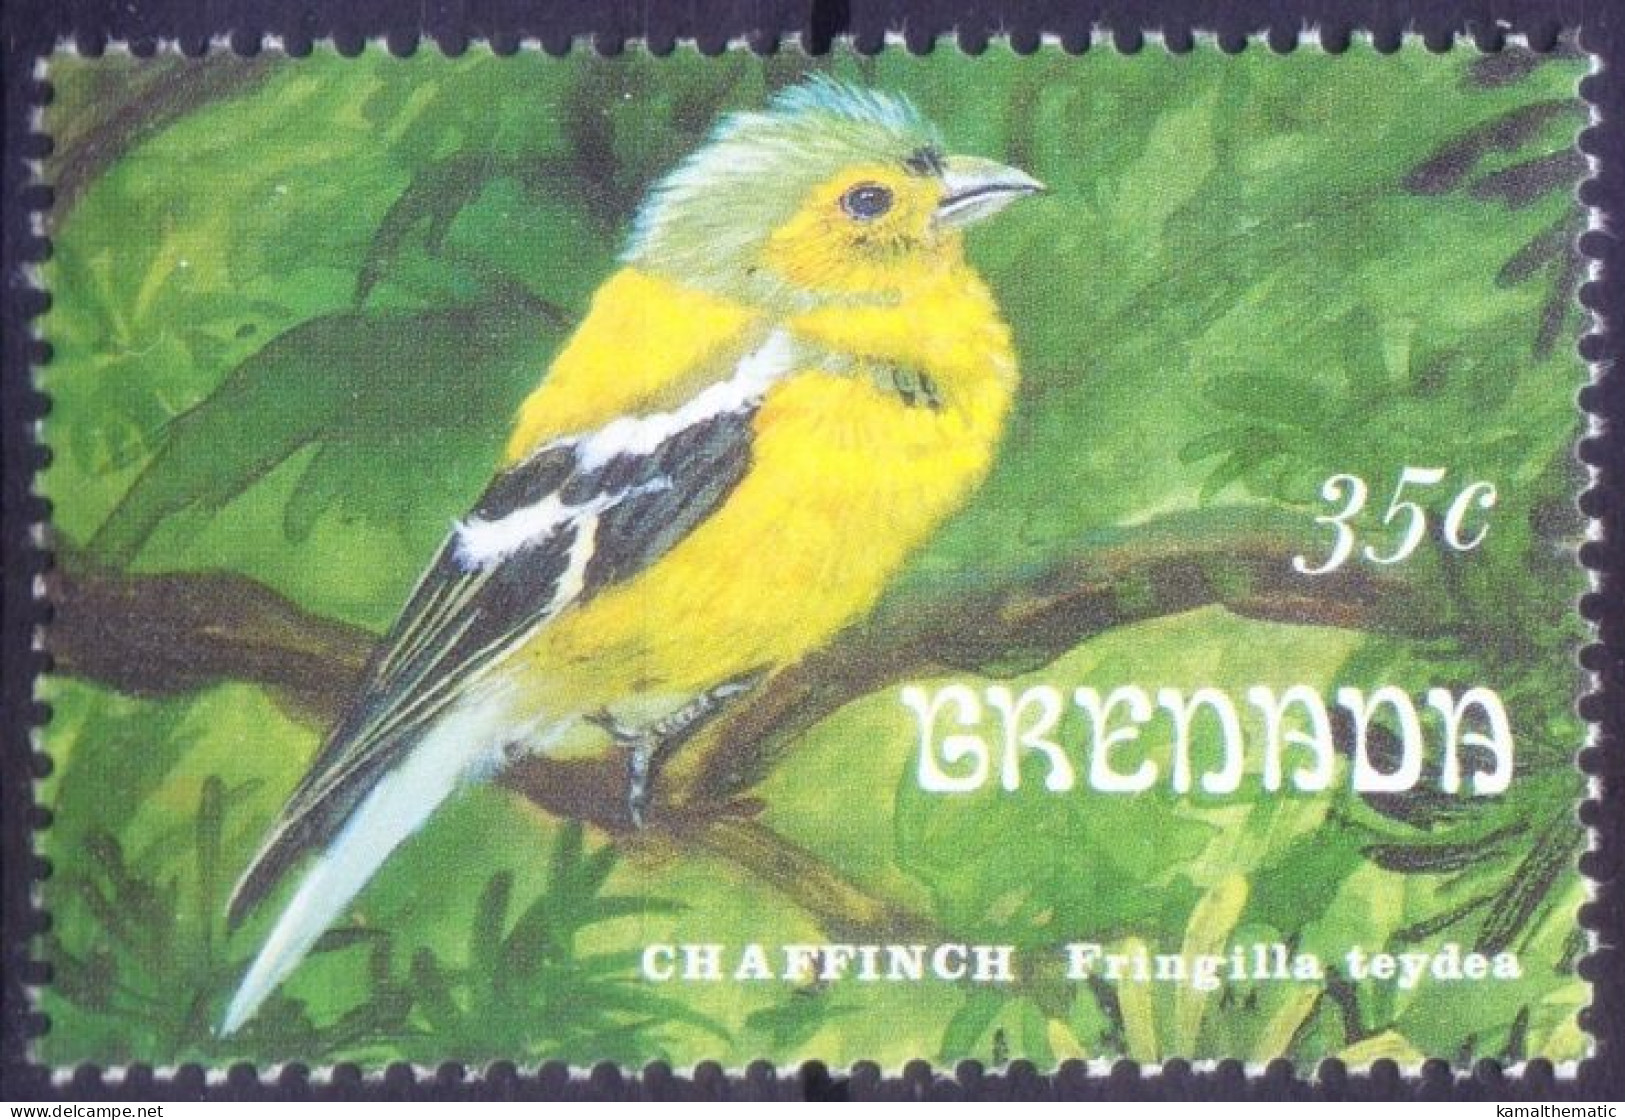 Common Chaffinch, Song Birds, Grenada 1993 MNH - - Passereaux